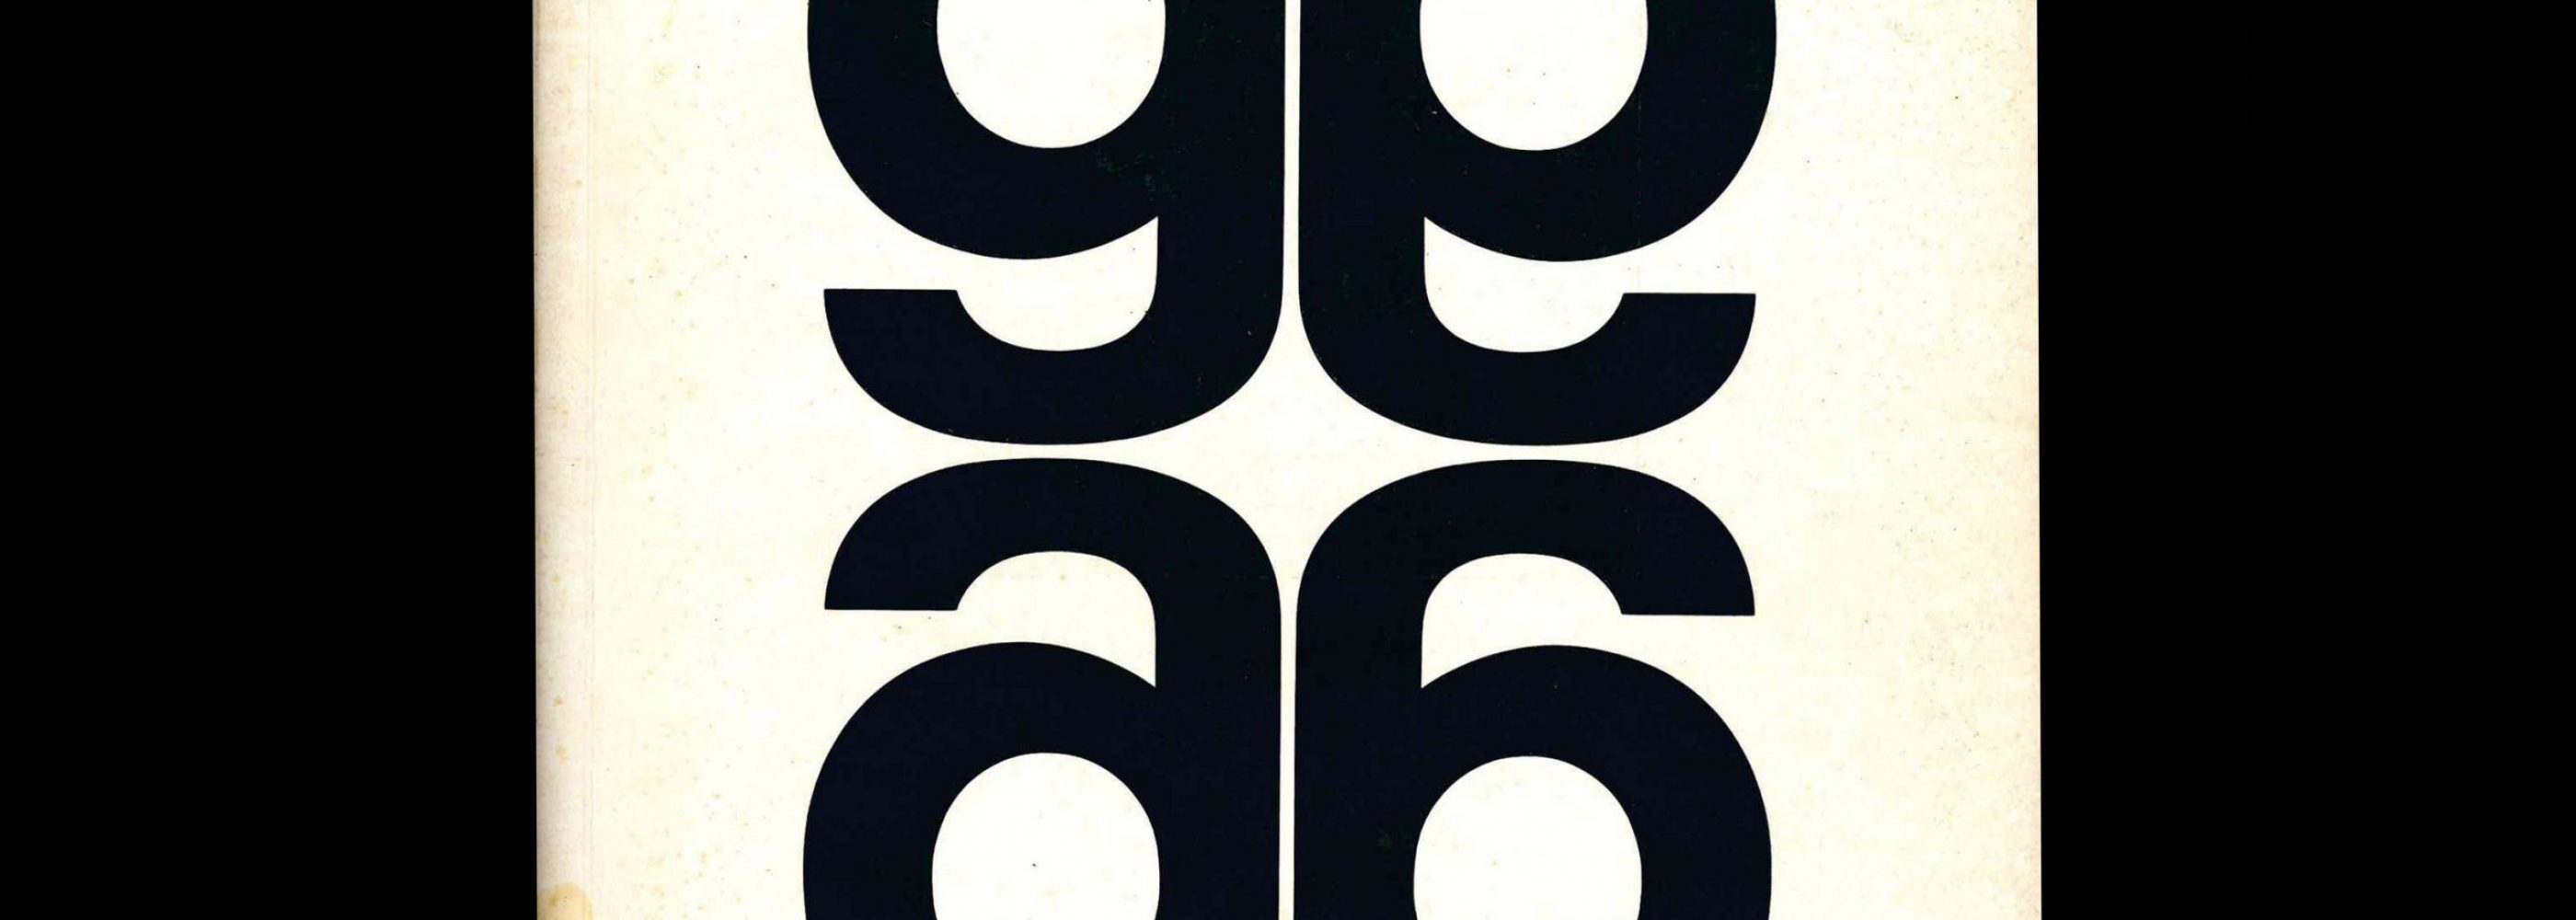 Gebrauchsgraphik, 9, 1967. Cover design by Carlo Bruni